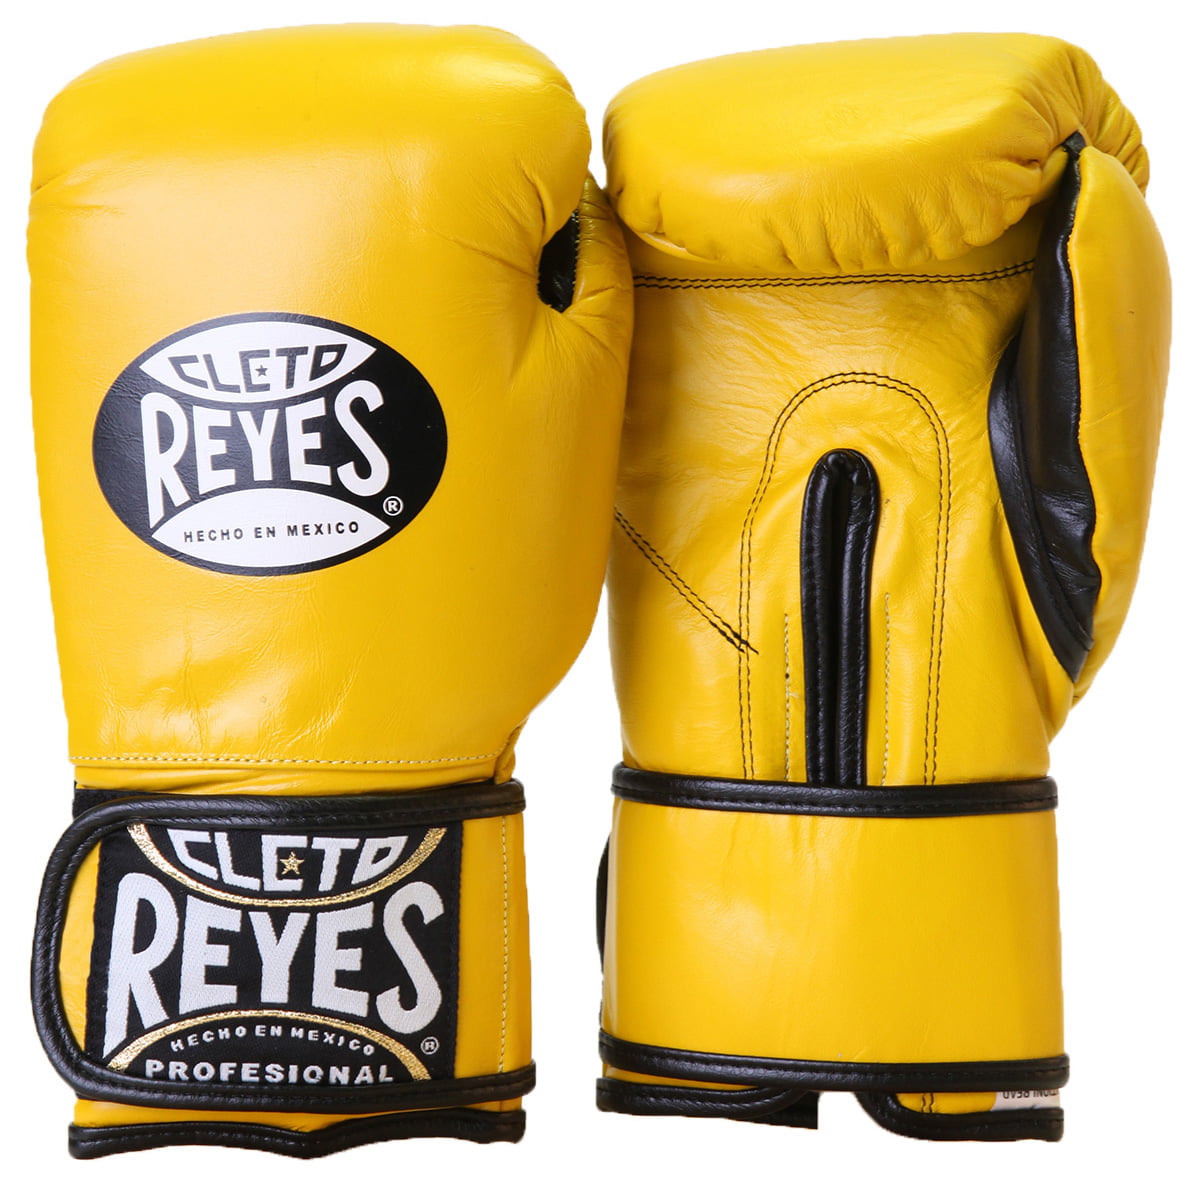 Authentic Cleto Reyes YELLOW mini gloves 